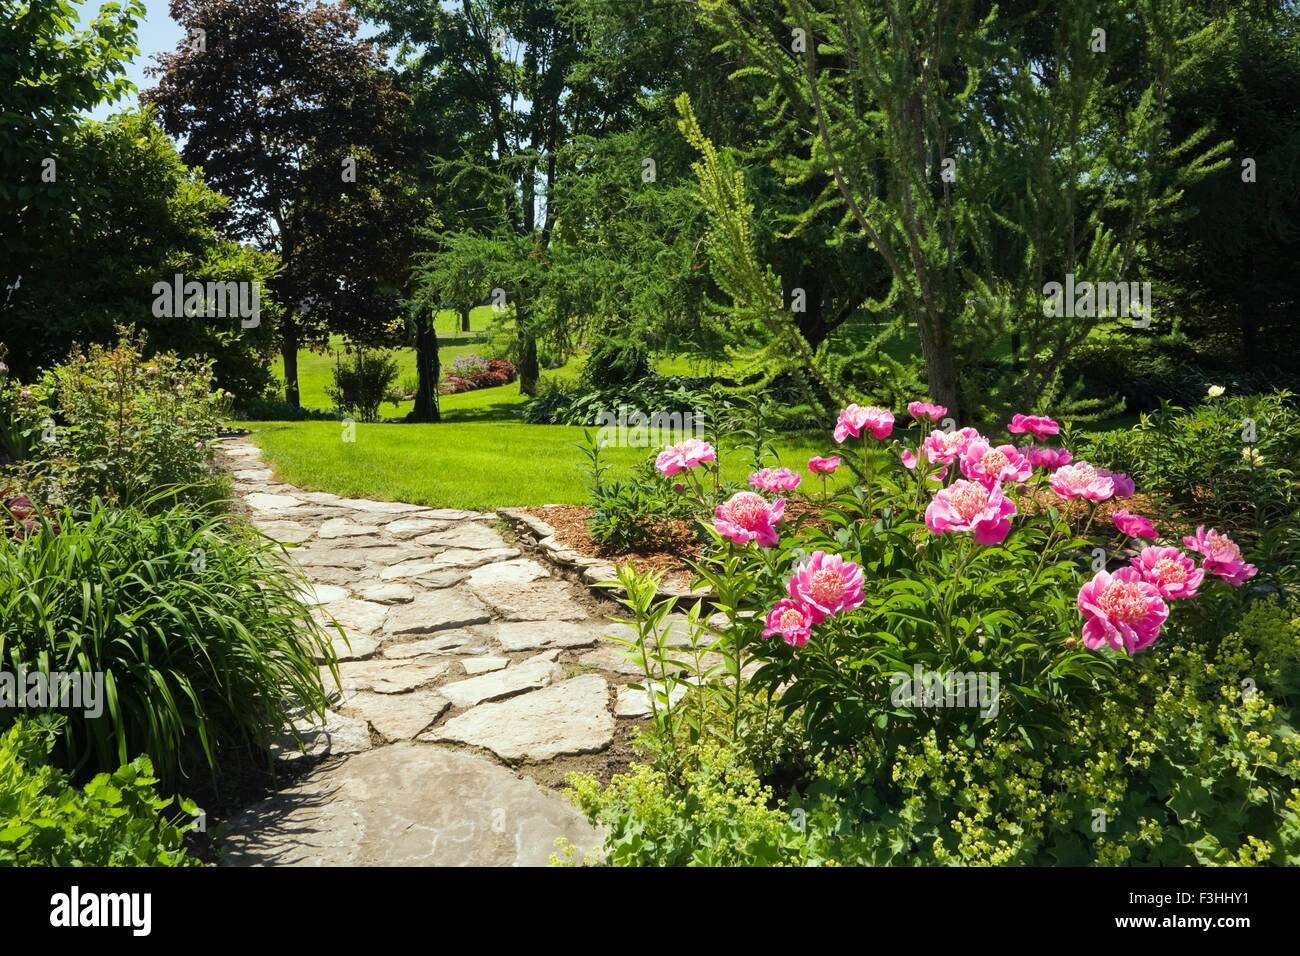 Flagstone path and pink peony flowers (paeonia) garden border in spring season Stock Photo